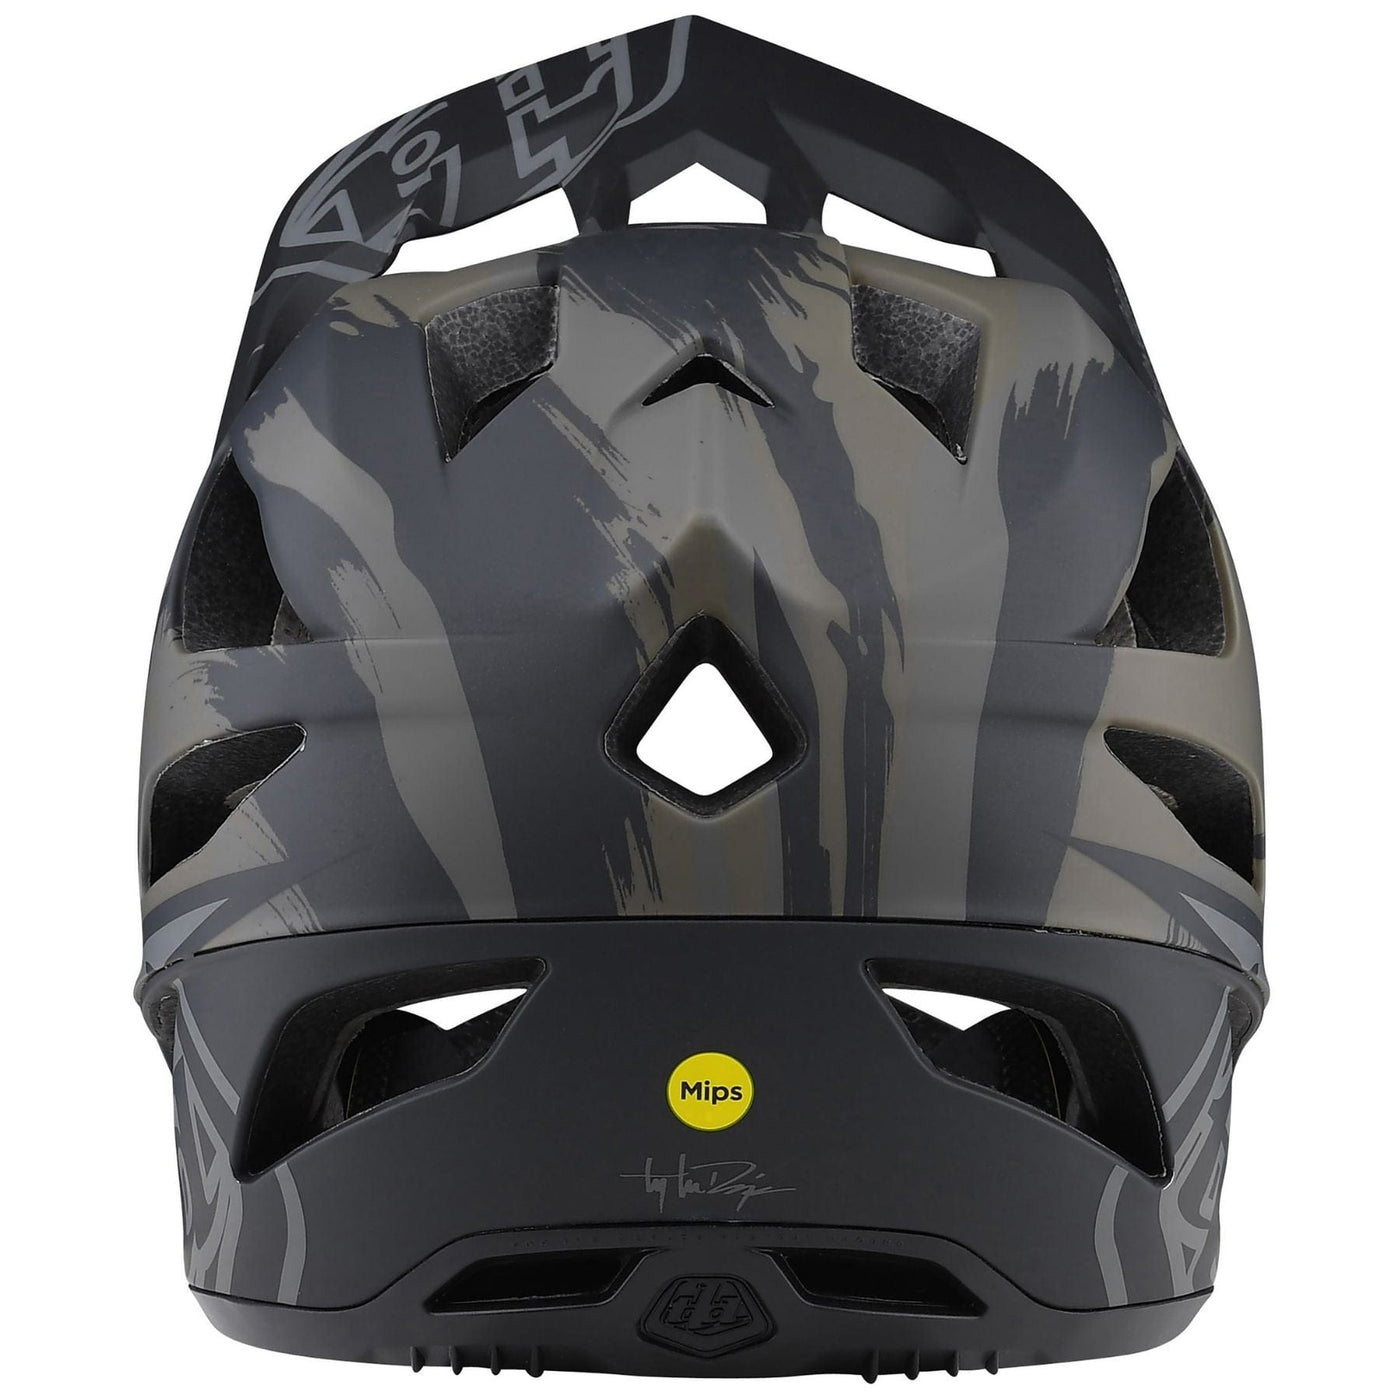 Troy Lee Designs STAGE MIPS Helmet Brush Camo - Military